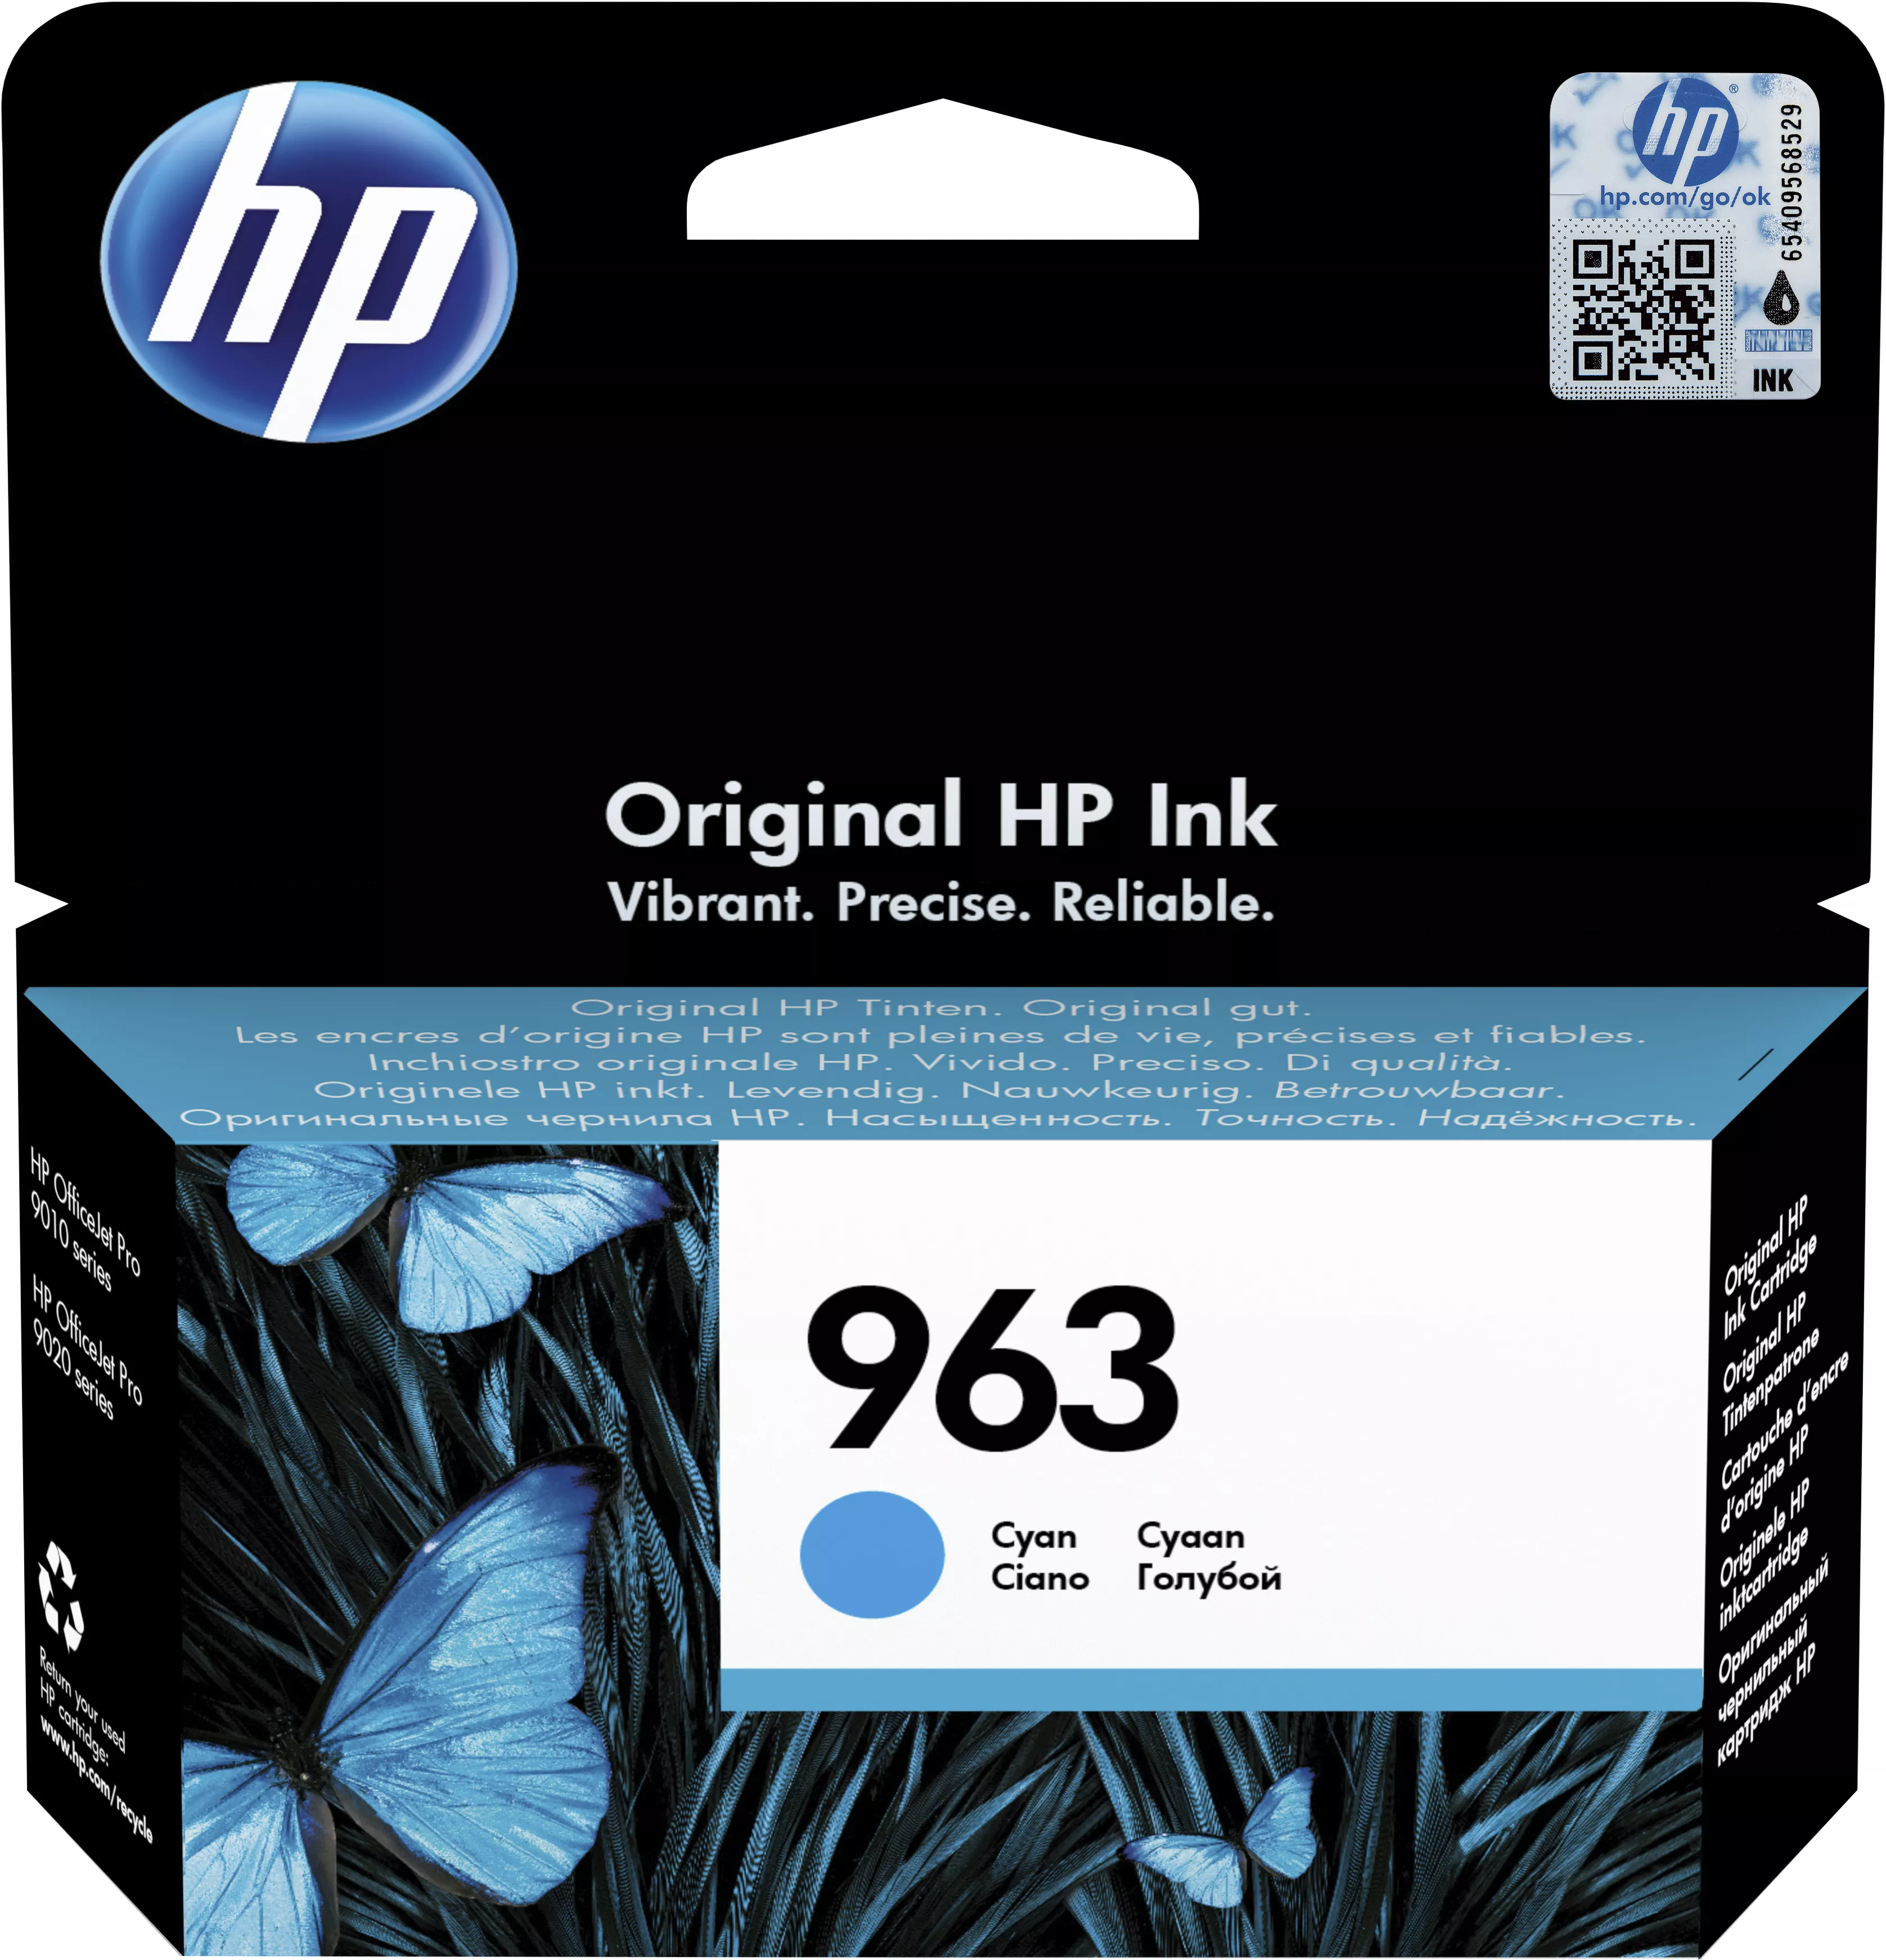 Achat HP 963 Cyan Original Ink Cartridge au meilleur prix